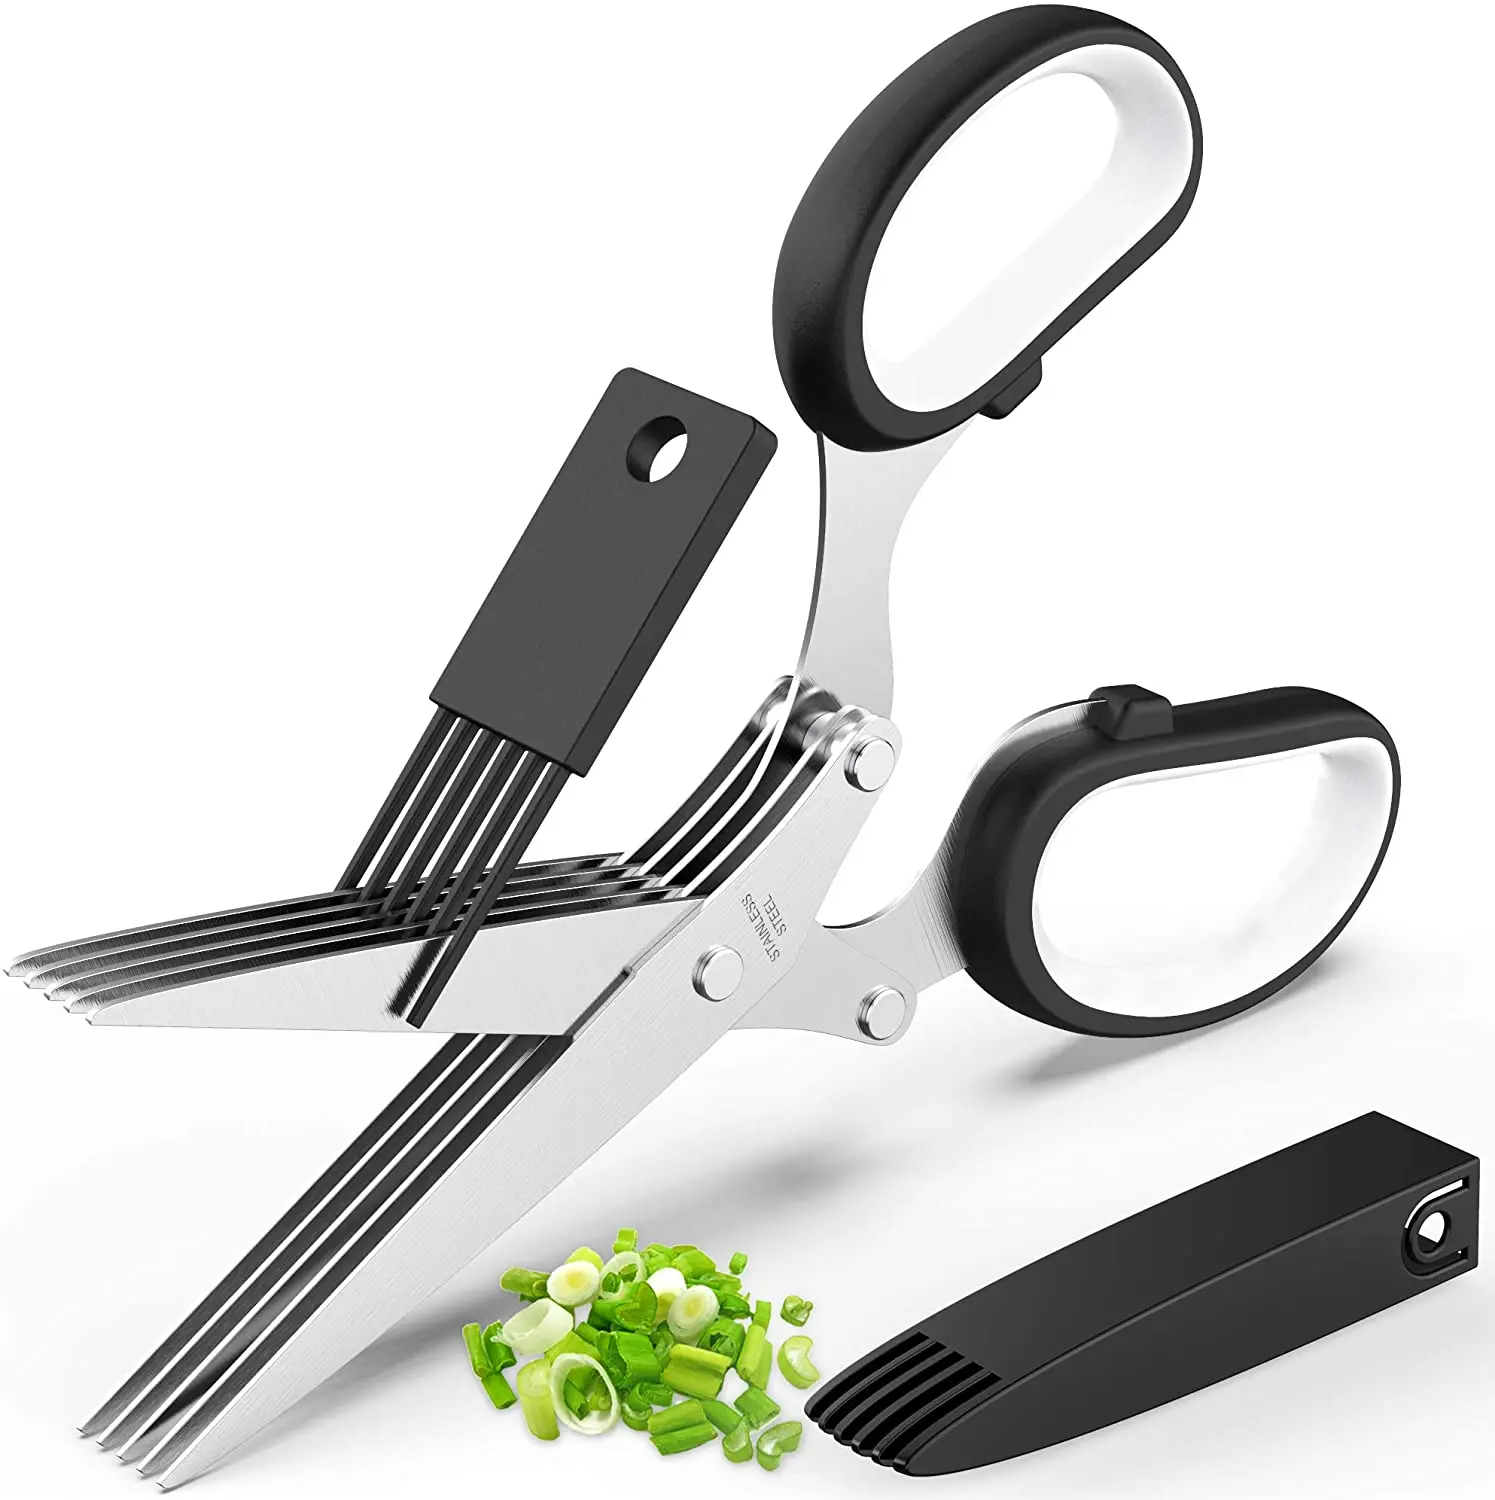 Multi Shear Kitchen Scissors with Herb Stripper and Sheath